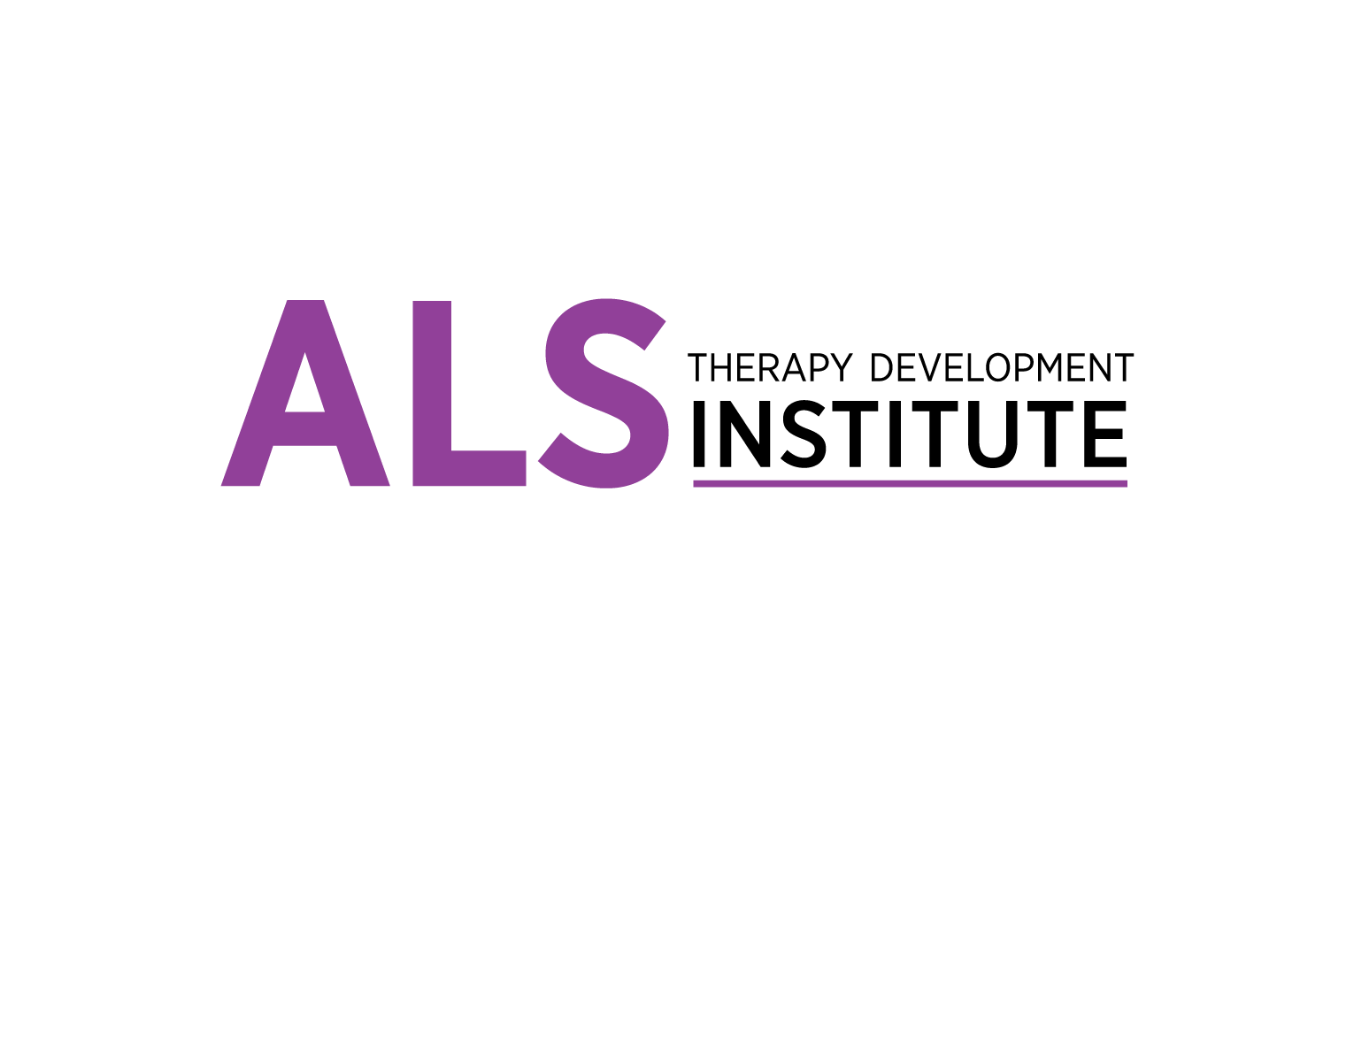 ALS Therapy Development Institute (ALS TDI)